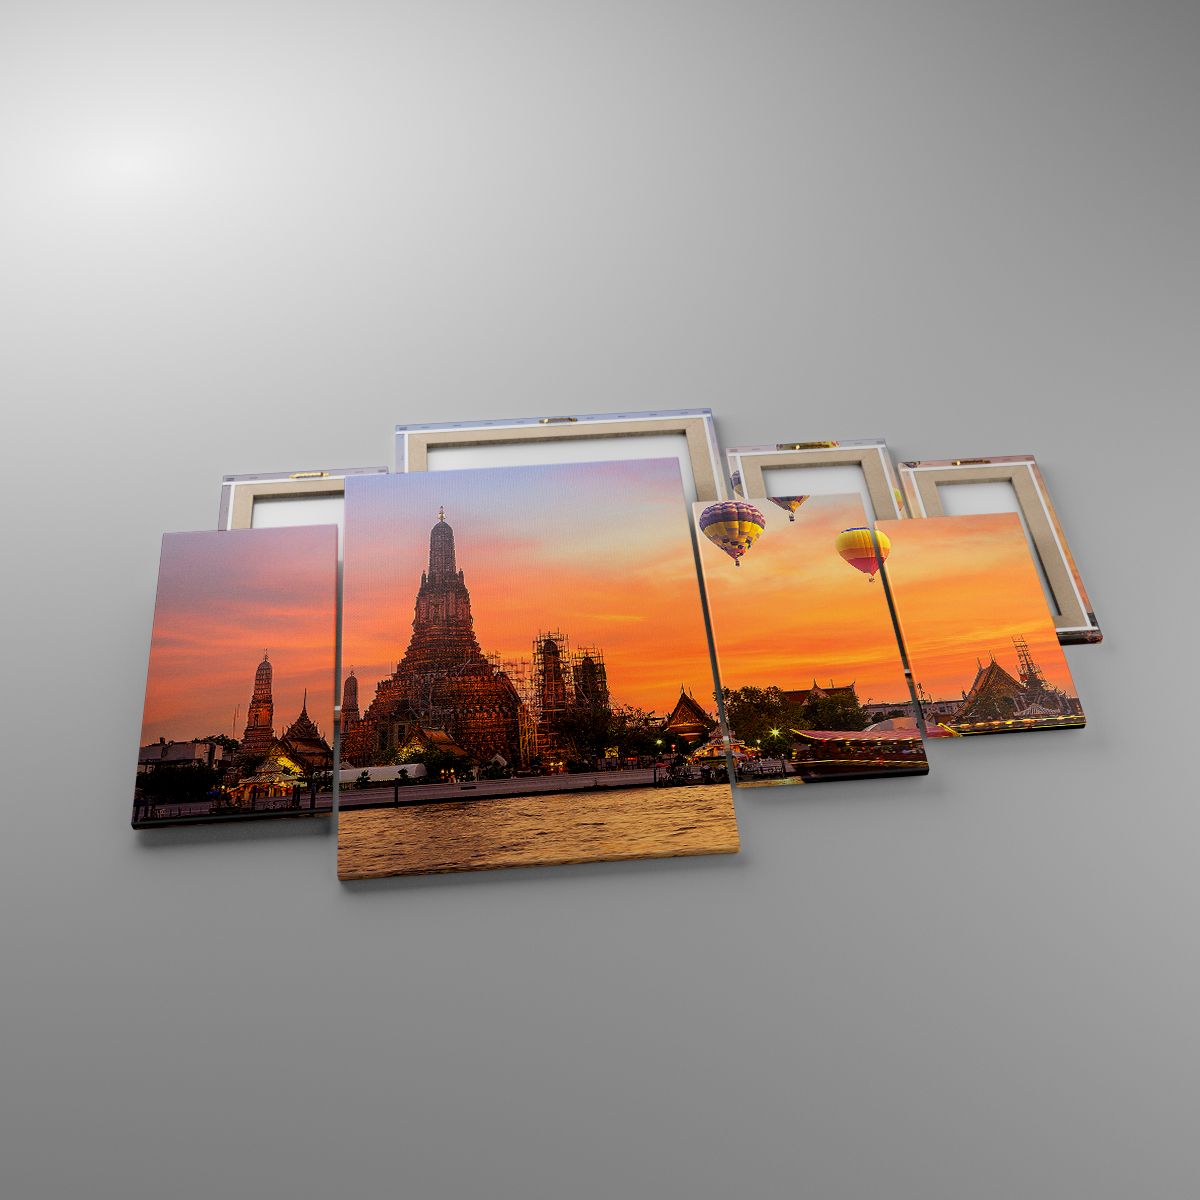 Quadri Bangkok, Quadri Tempio Dell'Alba, Quadri Tailandia, Quadri Palloncini, Quadri Asia